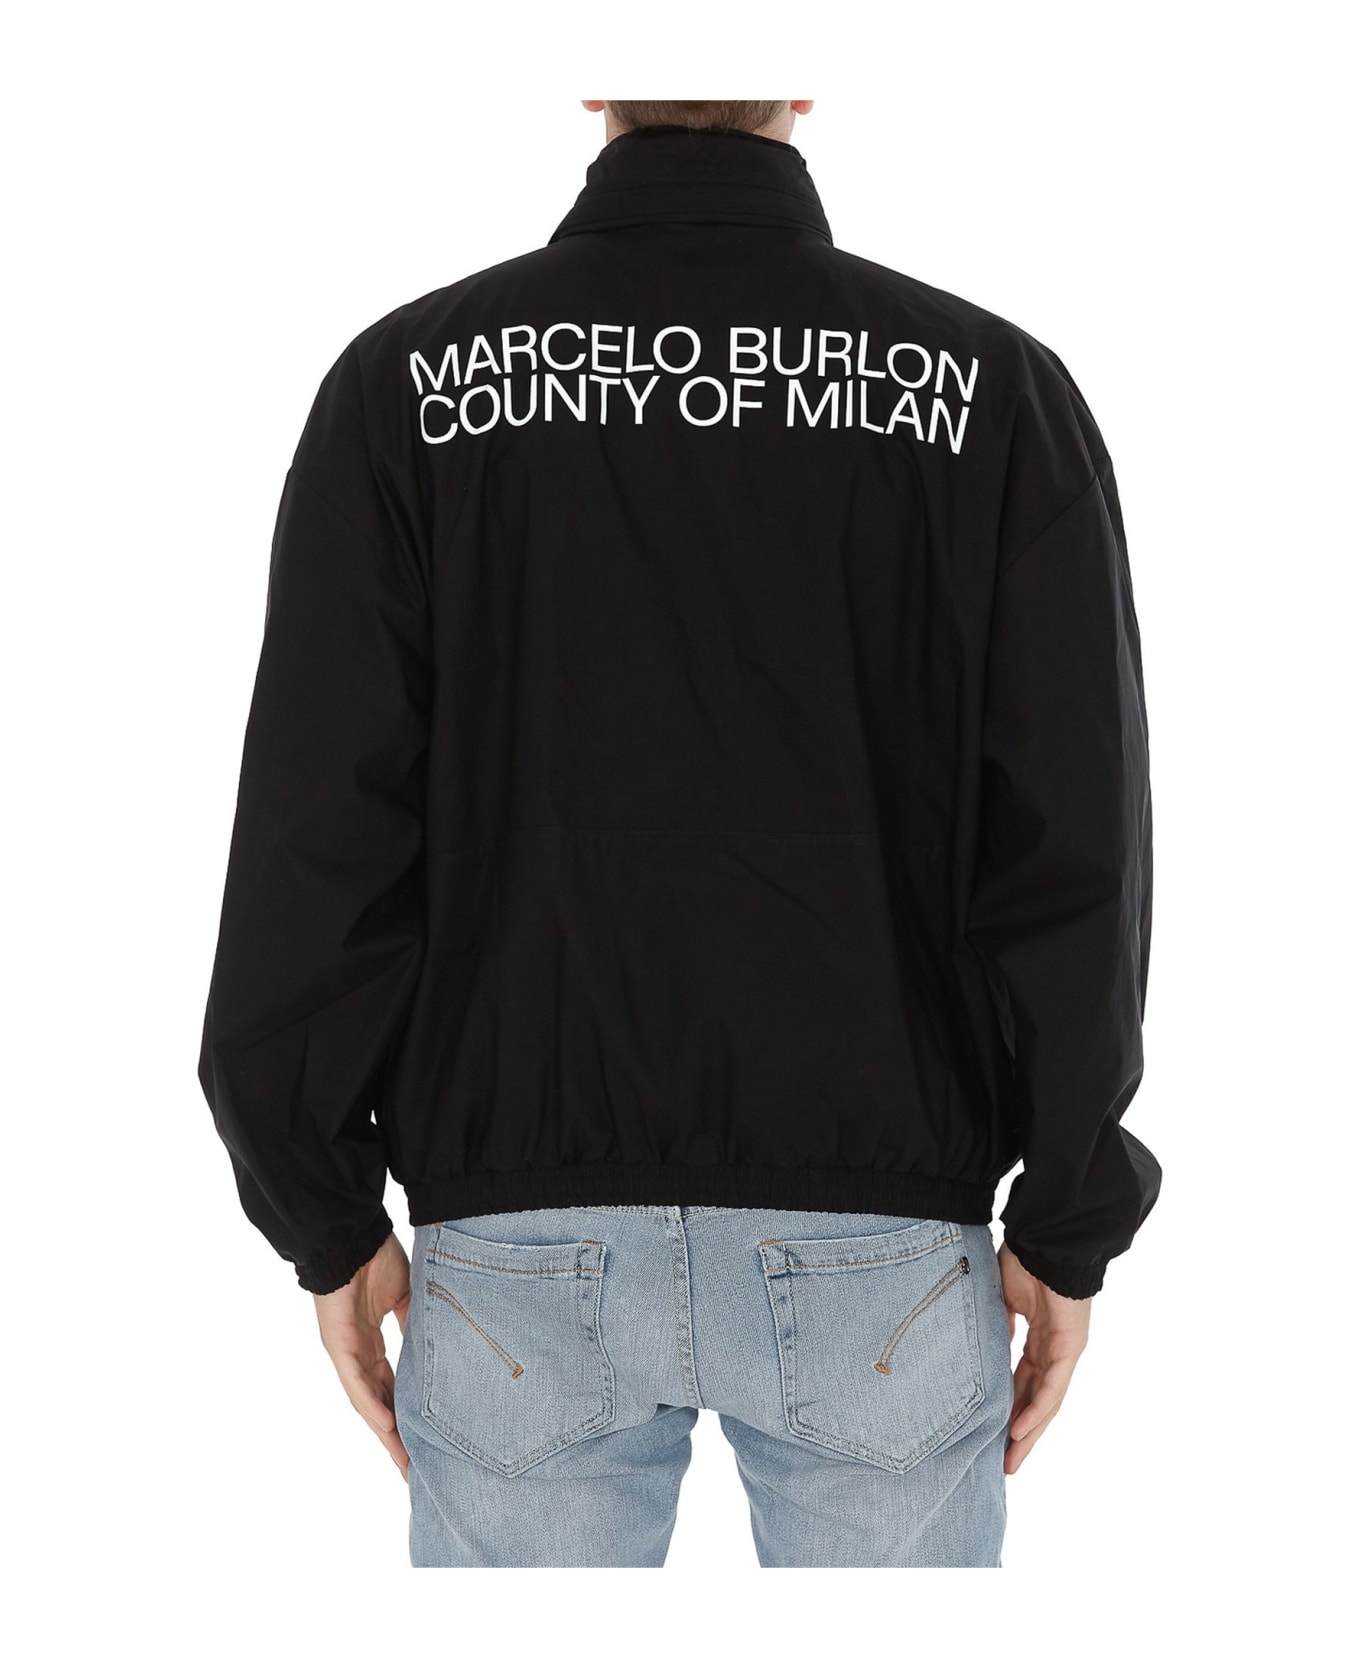 Marcelo Burlon County Of Milan Jacket - Black